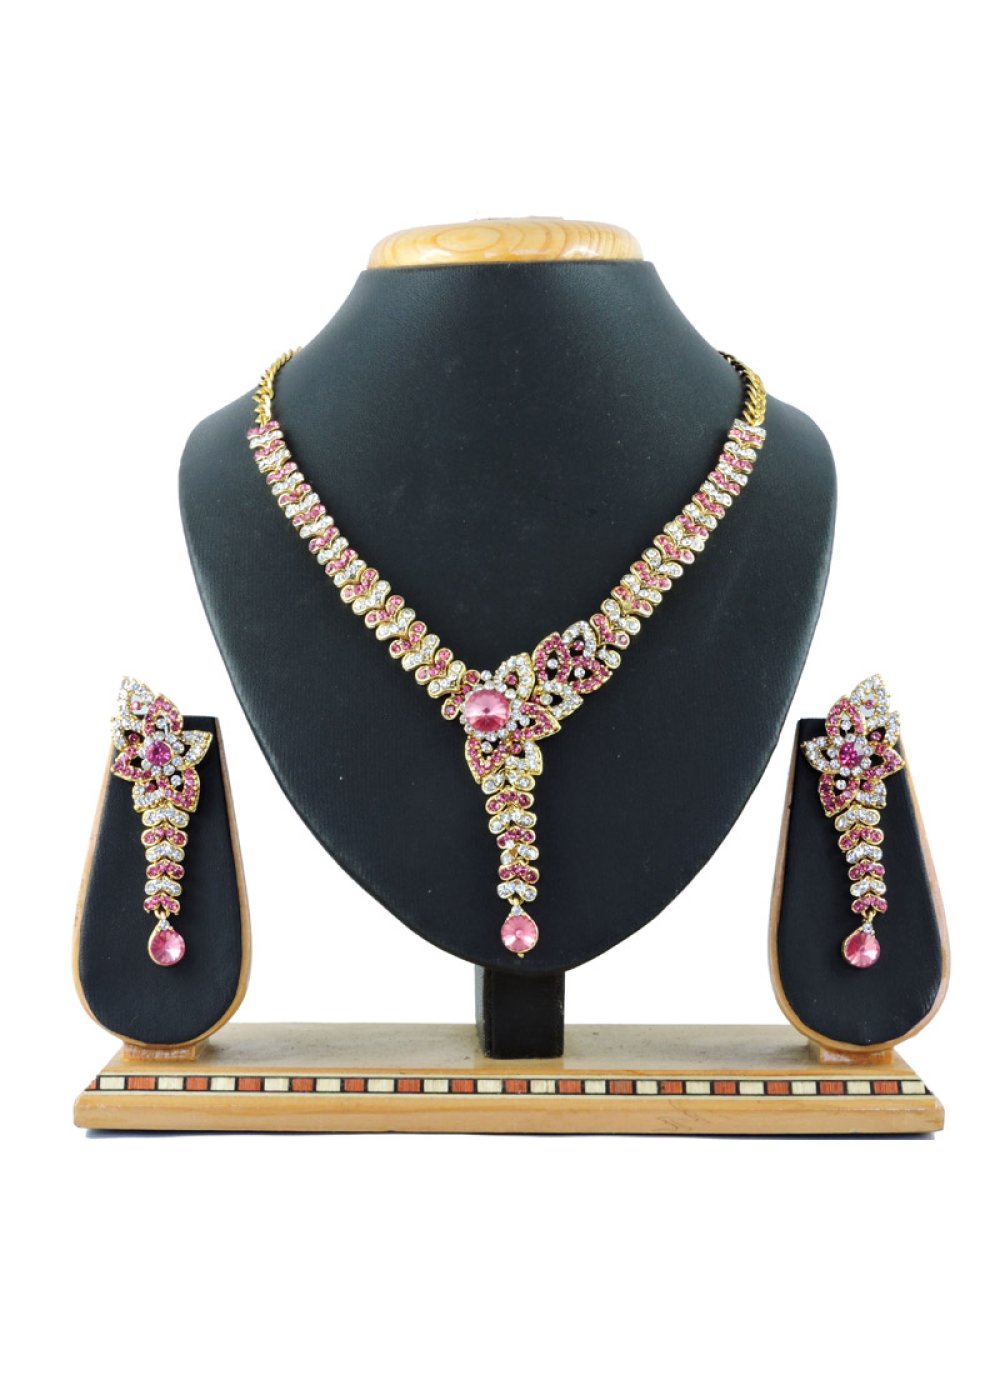 Divine Stone Work Pink and White Gold Rodium Polish Necklace Set